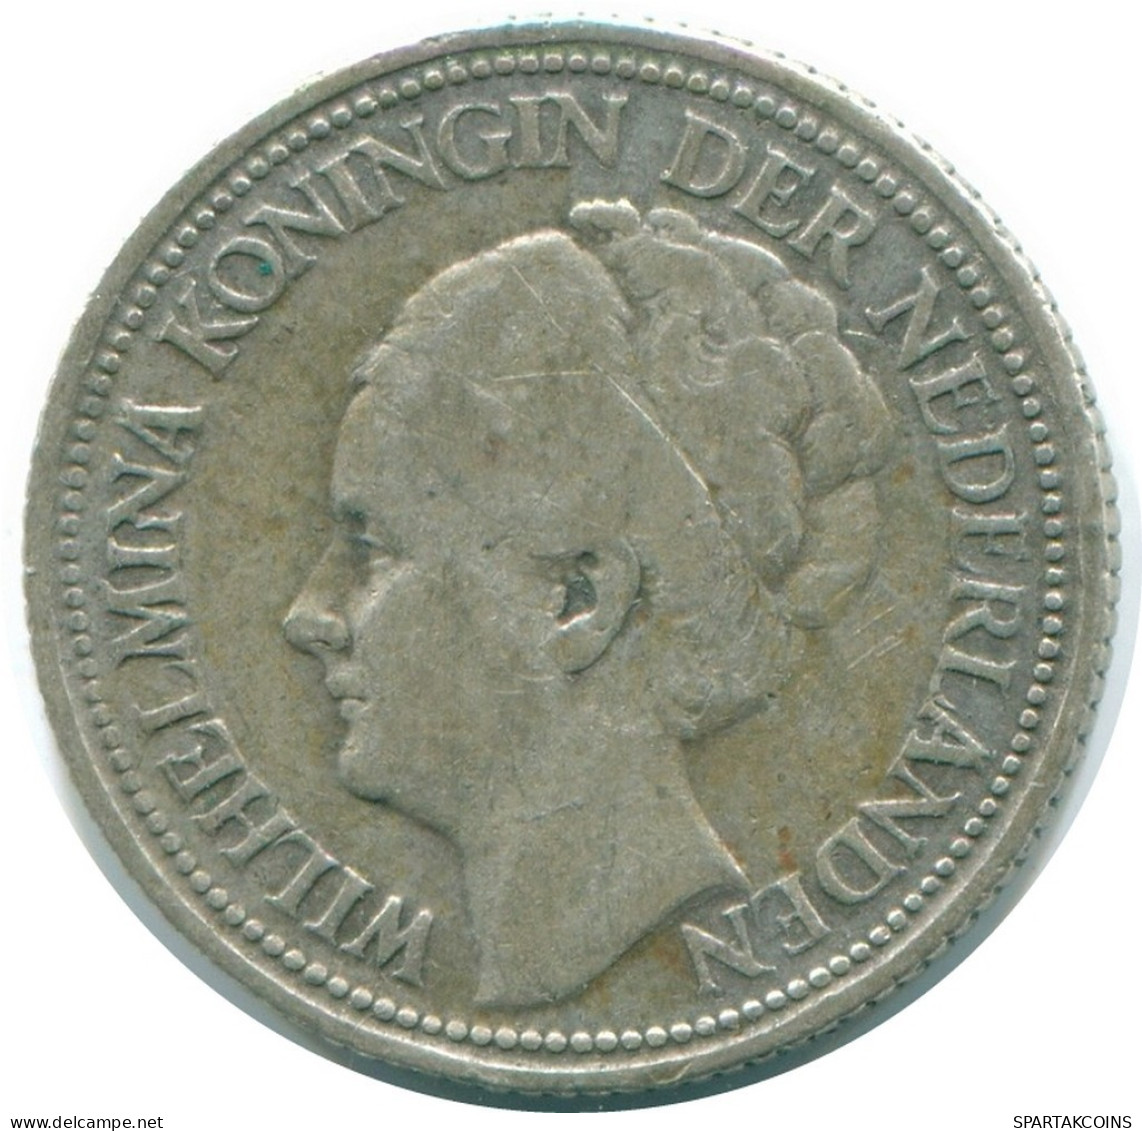 1/4 GULDEN 1947 CURACAO Netherlands SILVER Colonial Coin #NL10825.4.U.A - Curacao